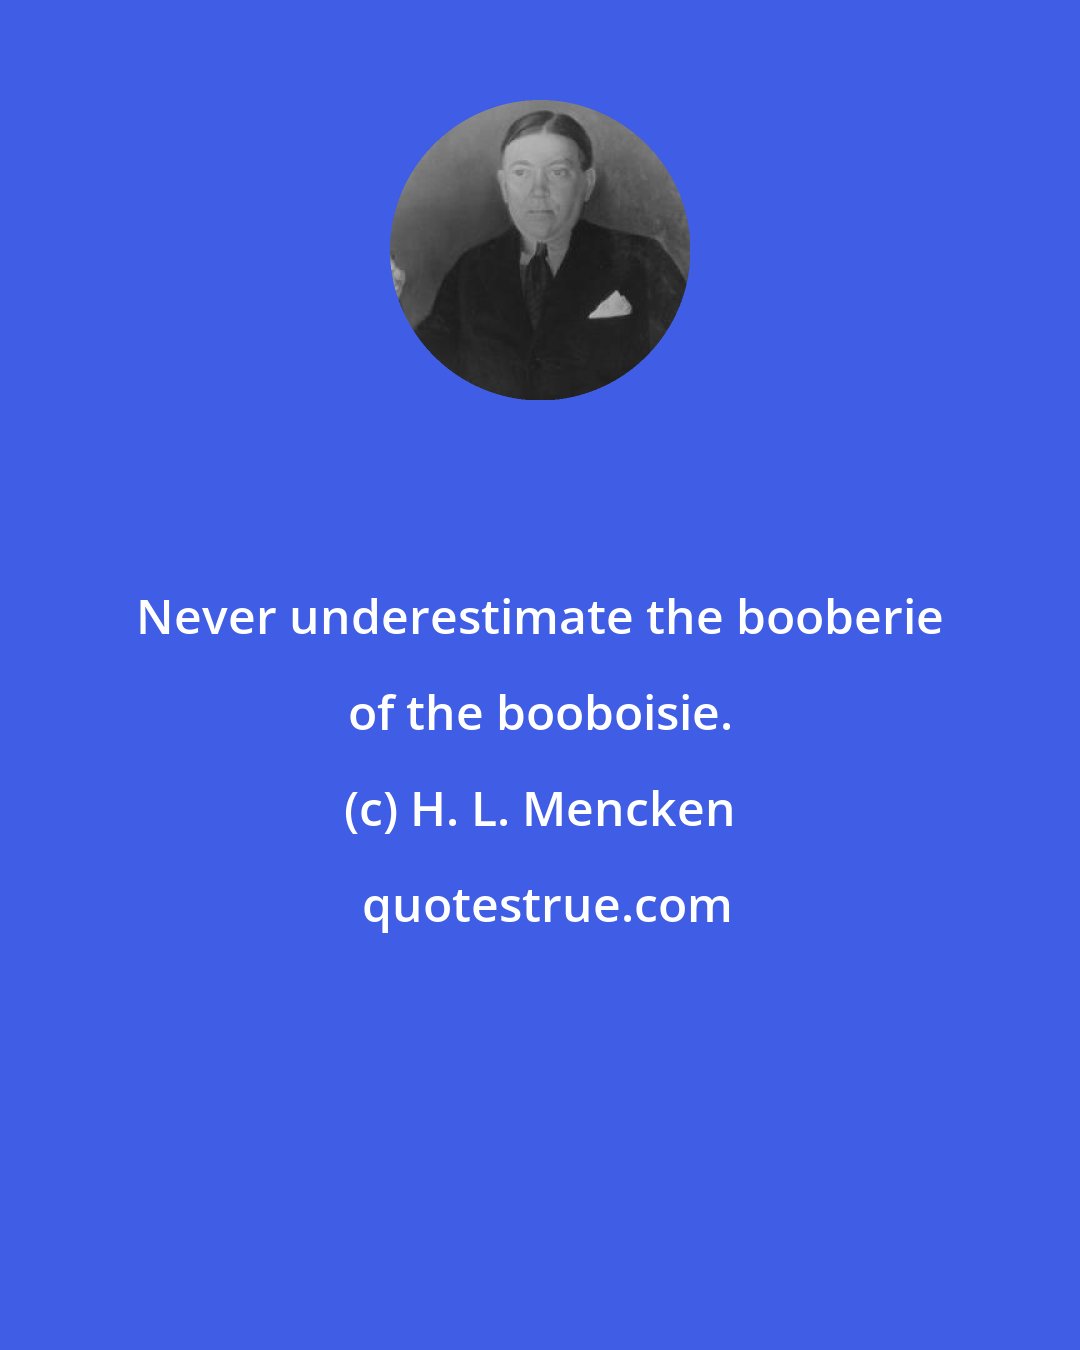 H. L. Mencken: Never underestimate the booberie of the booboisie.